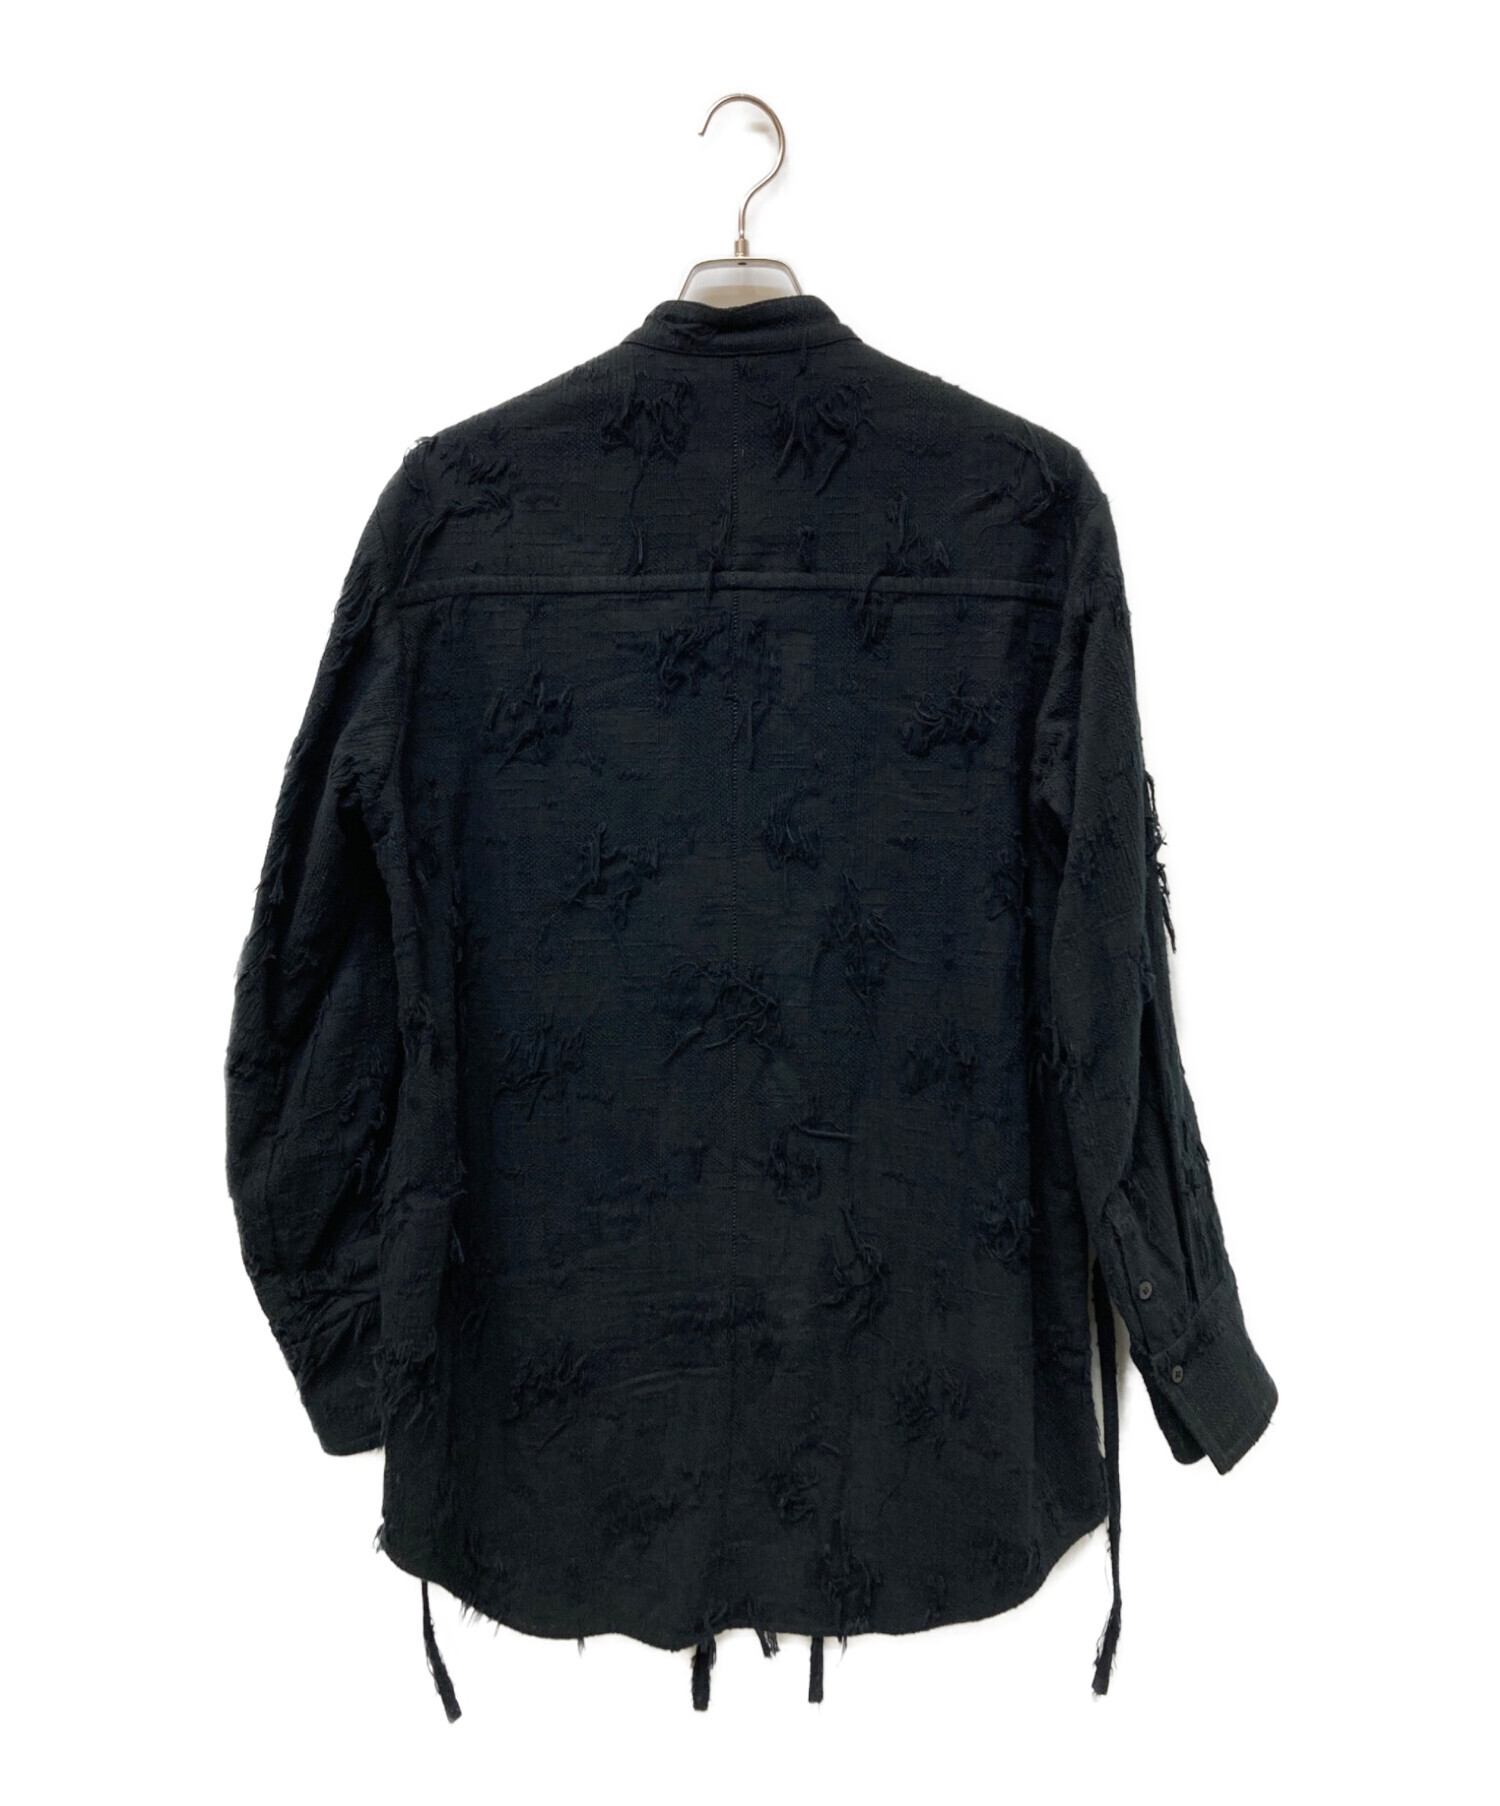 minus (-) Jacket boro ジャケット袖丈約64cm - テーラードジャケット